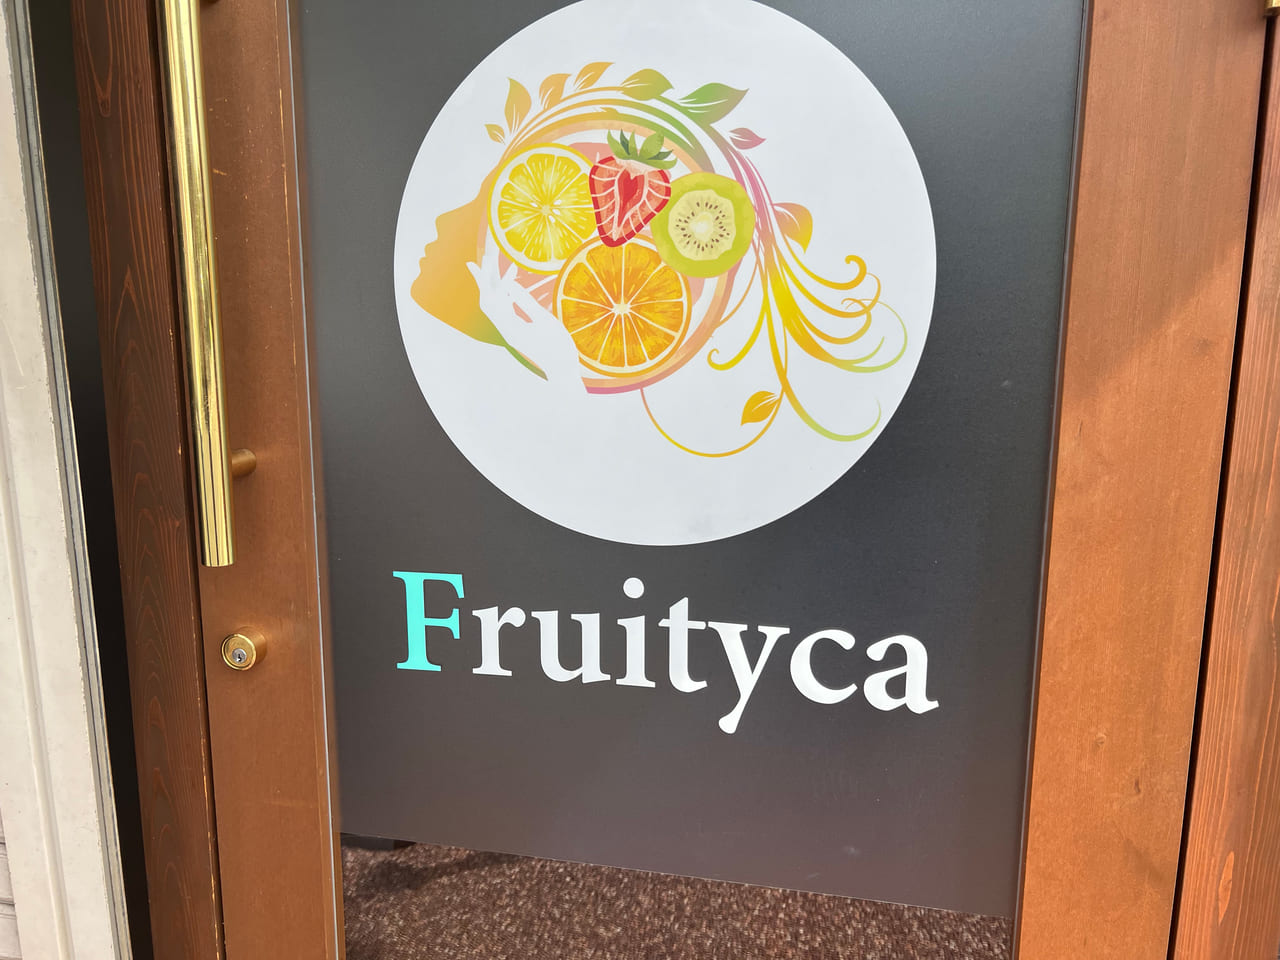 Fruityca(ﾌﾙｰﾃｨｶ)酵素ランチ&ロースイーツ